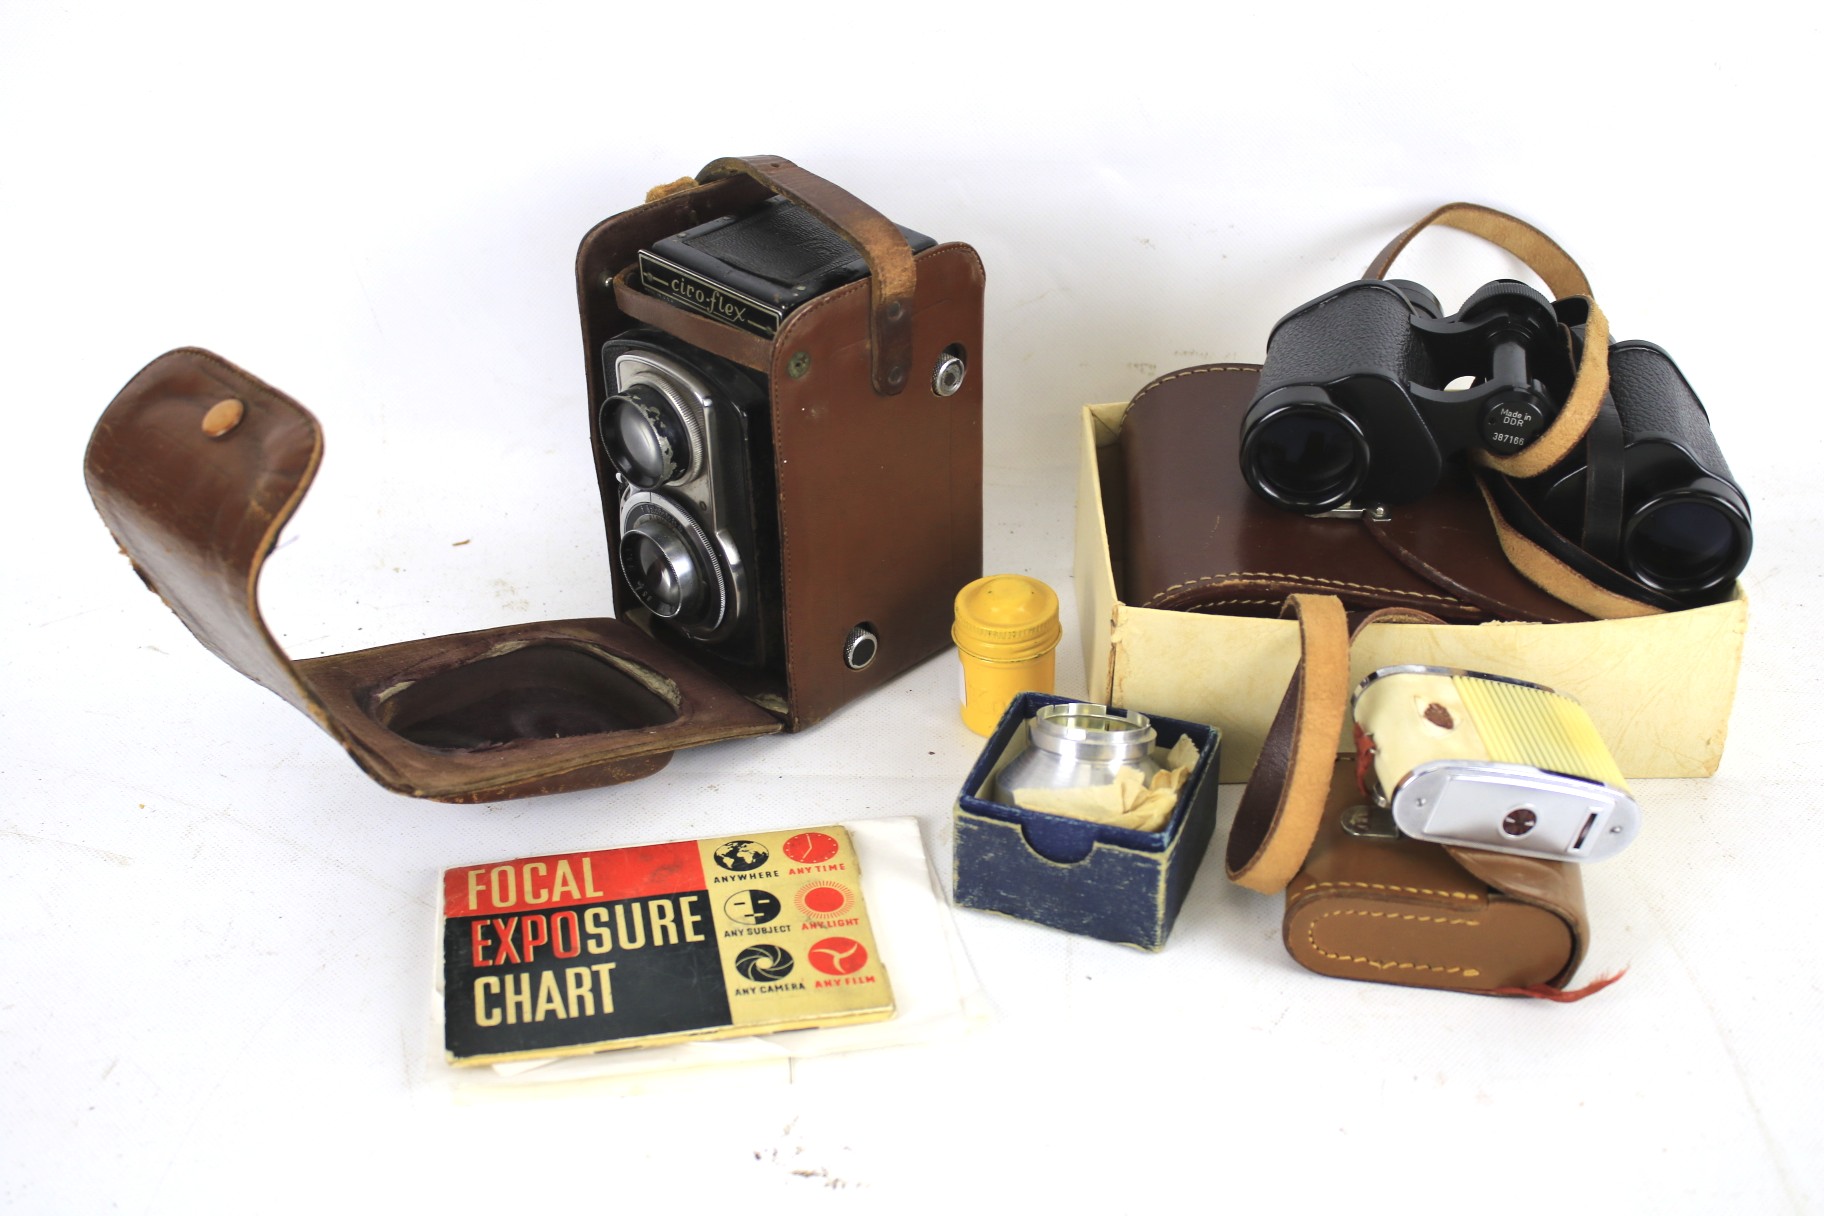 Ciro Flex camera in case and a pair of Noctovist binoculars in original case, etc.